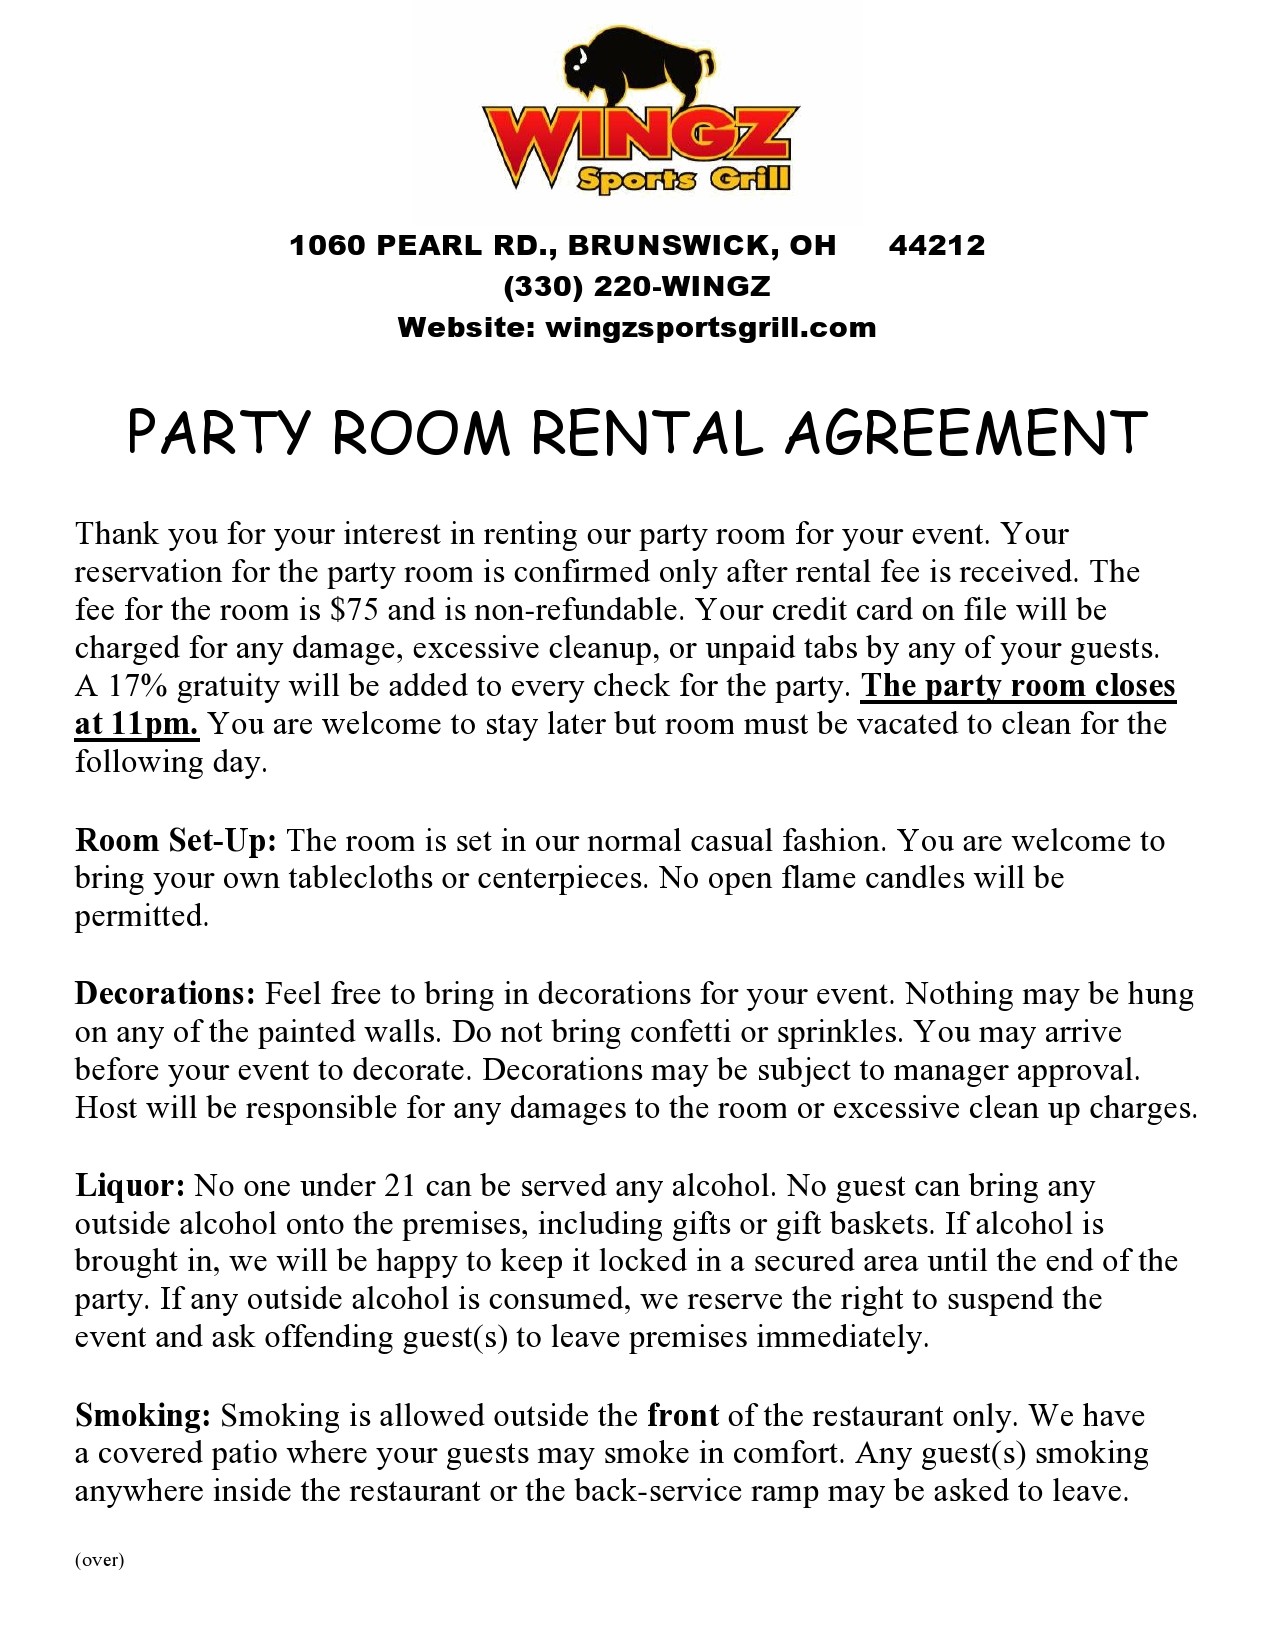 Free room rental agreement 38